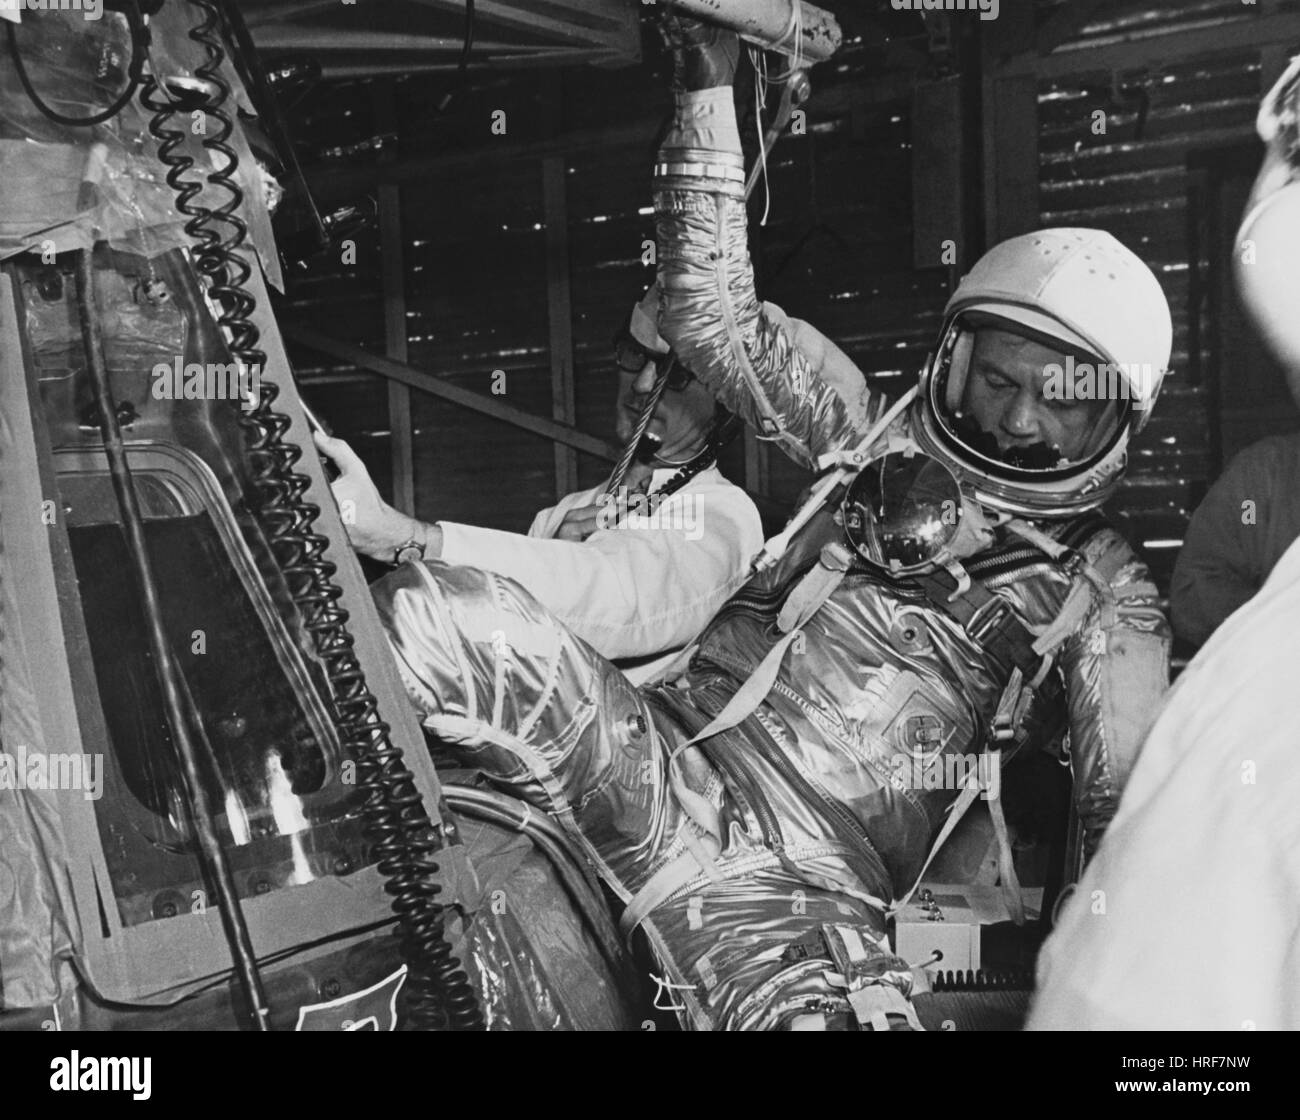 With Mercury Friendship 7 Spacecraft 10x8 Photo Astronaut John H Glenn Jr 